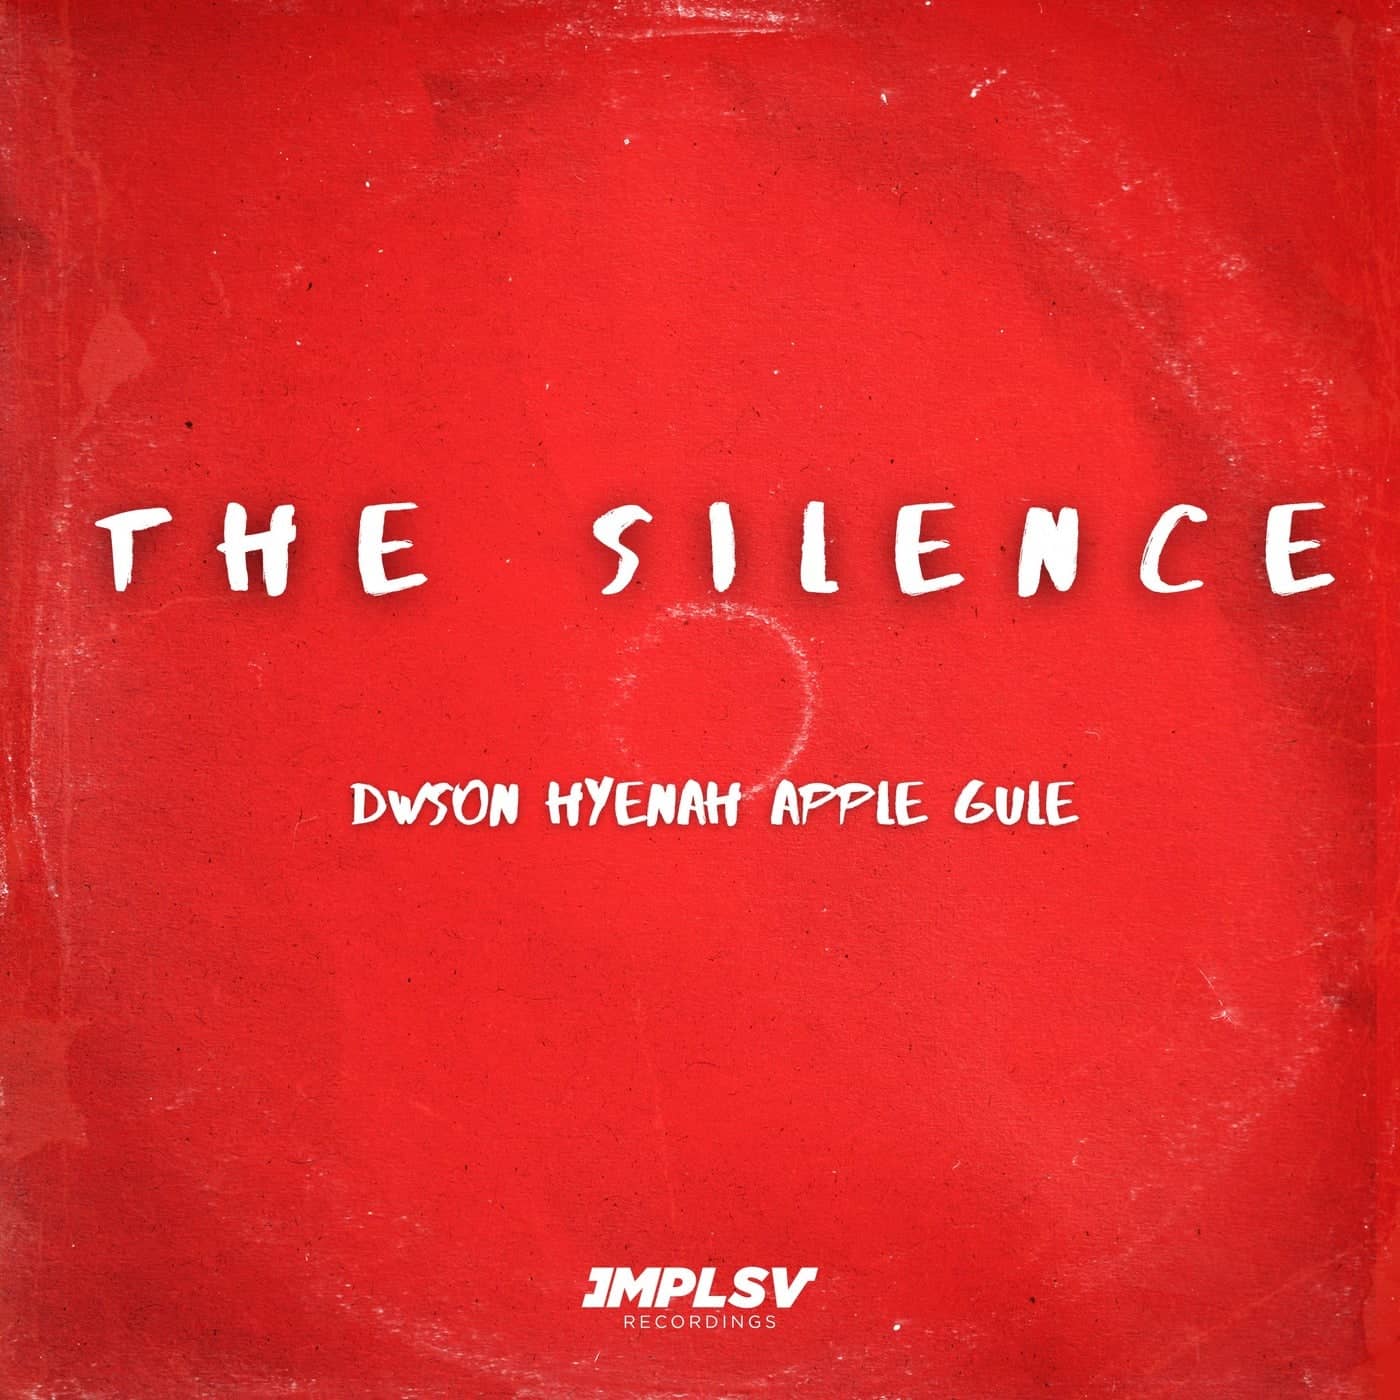 Download Hyenah, Apple Gule, Dwson - The Silence [IMPLSV03S1] on Electrobuzz